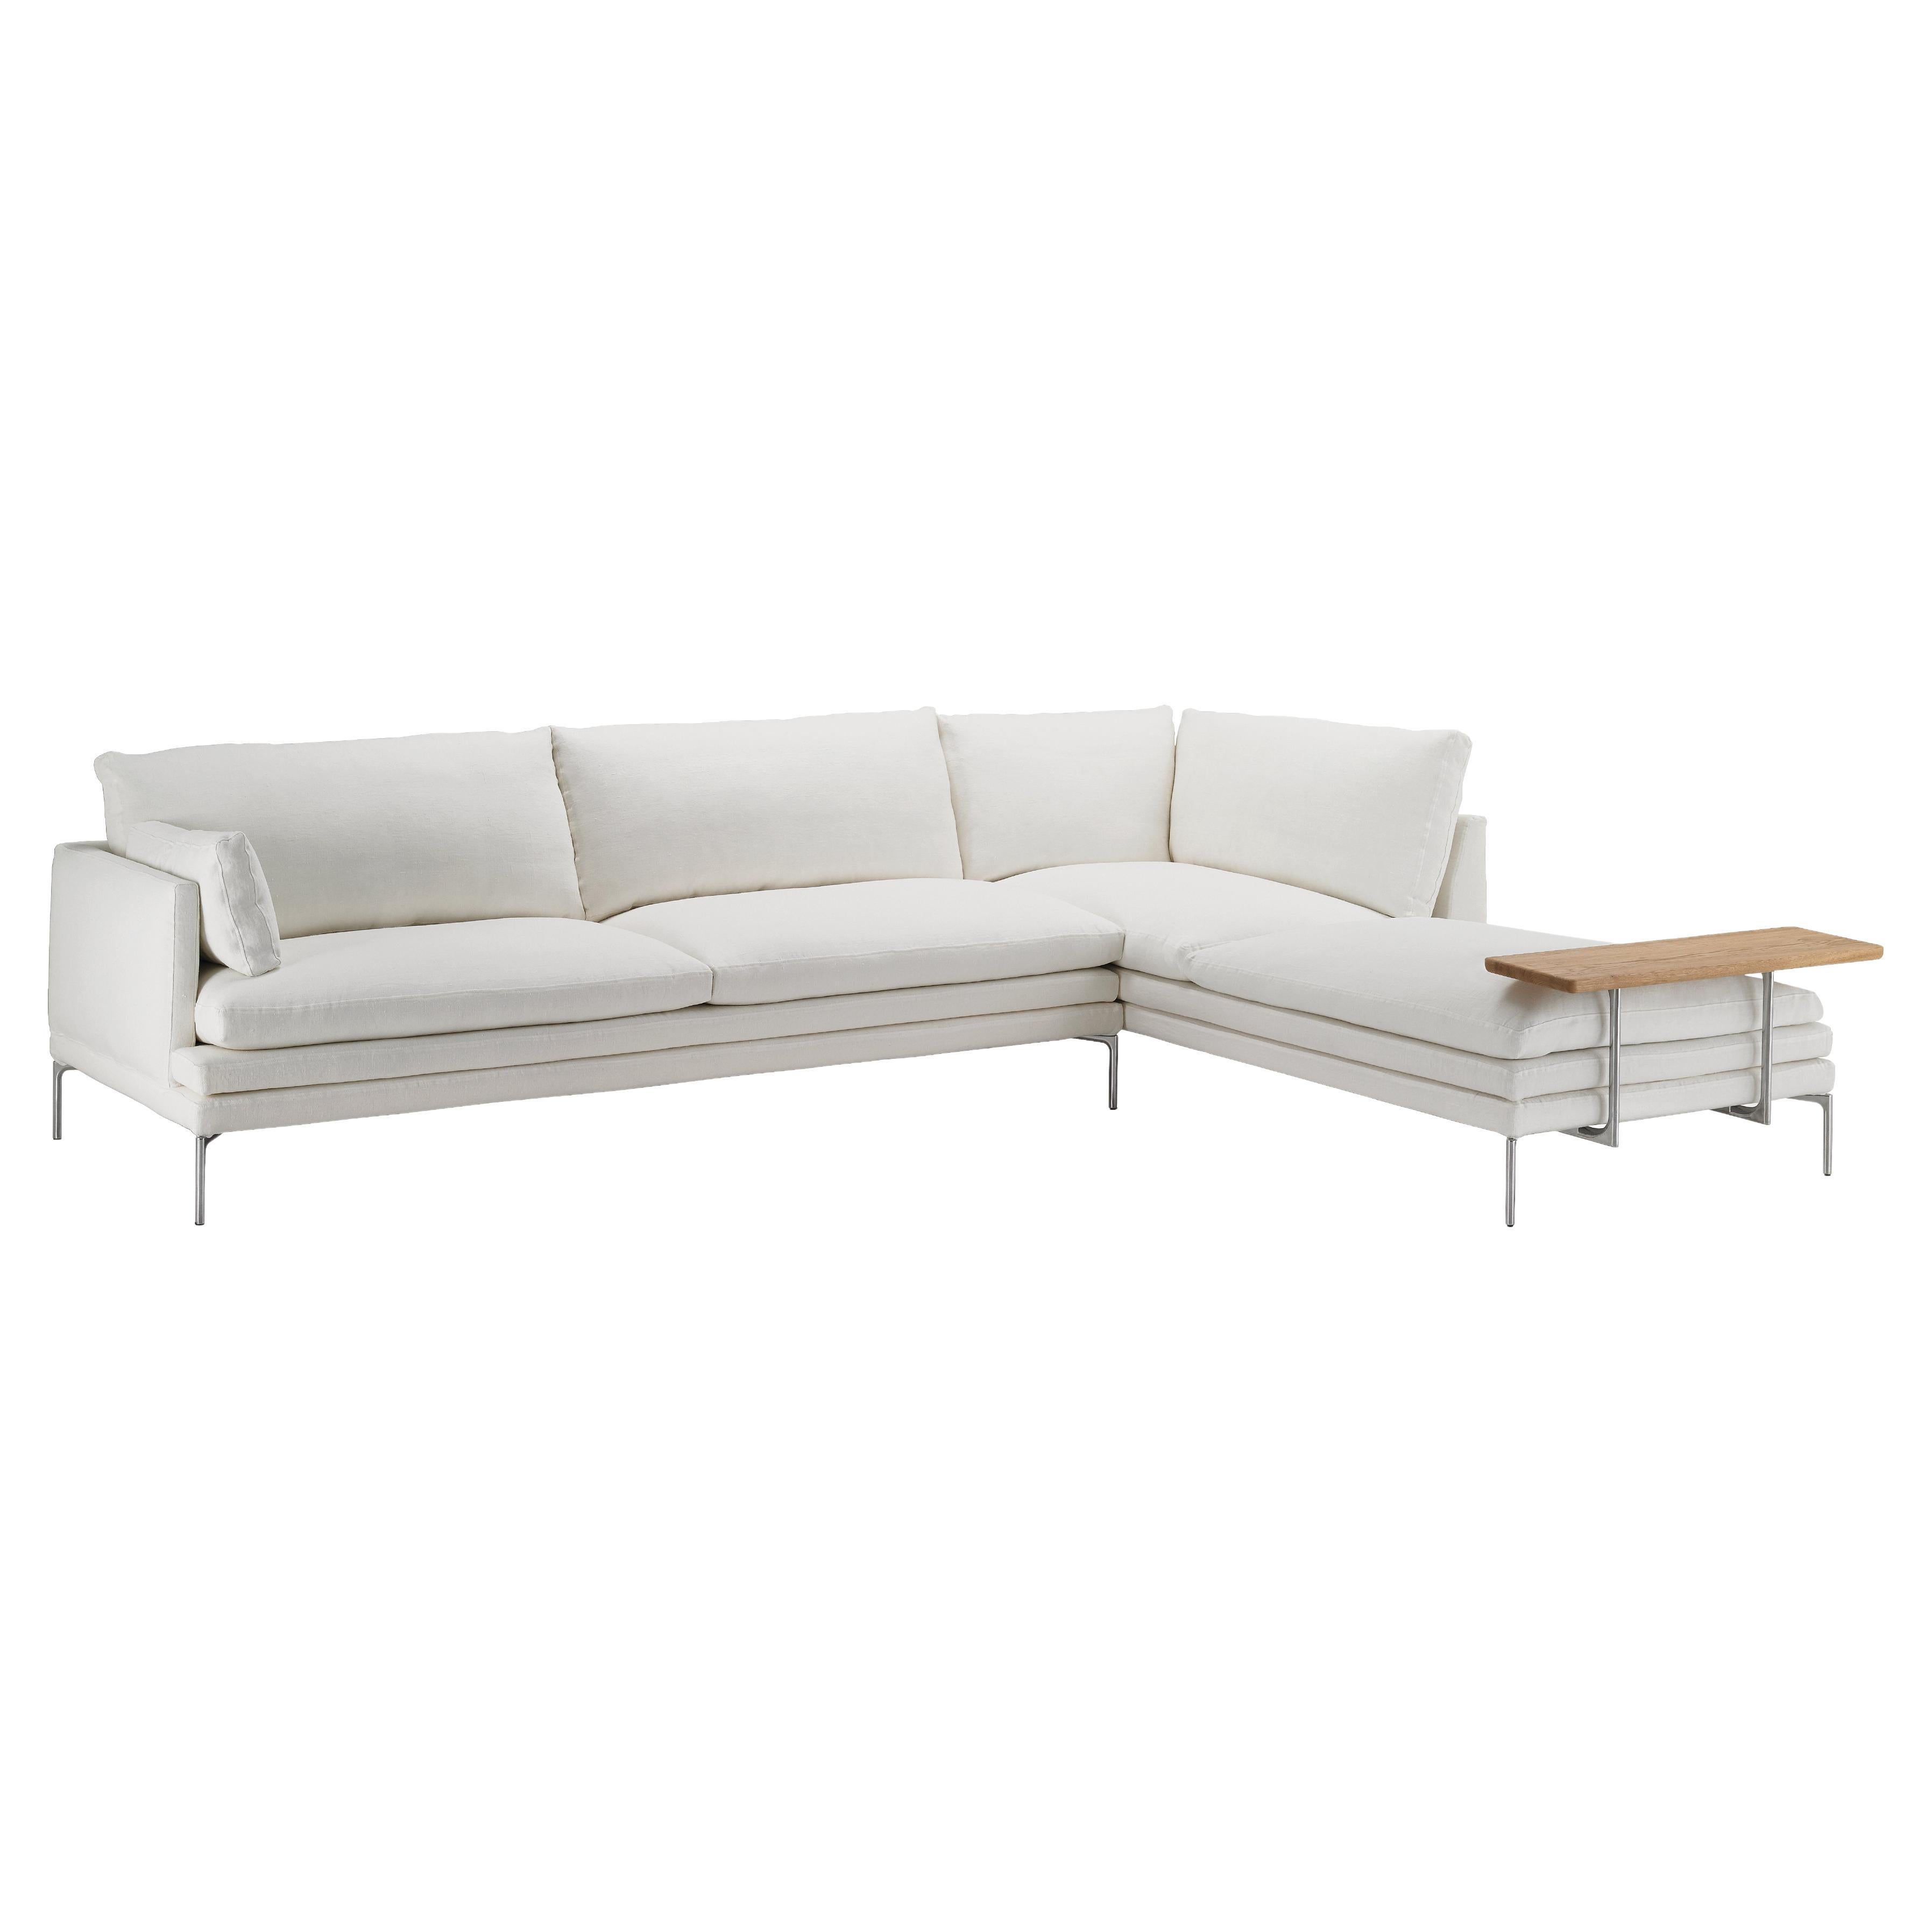 Zanotta William Modular Sofa with Shelf in White Fabric by Damian Williamson